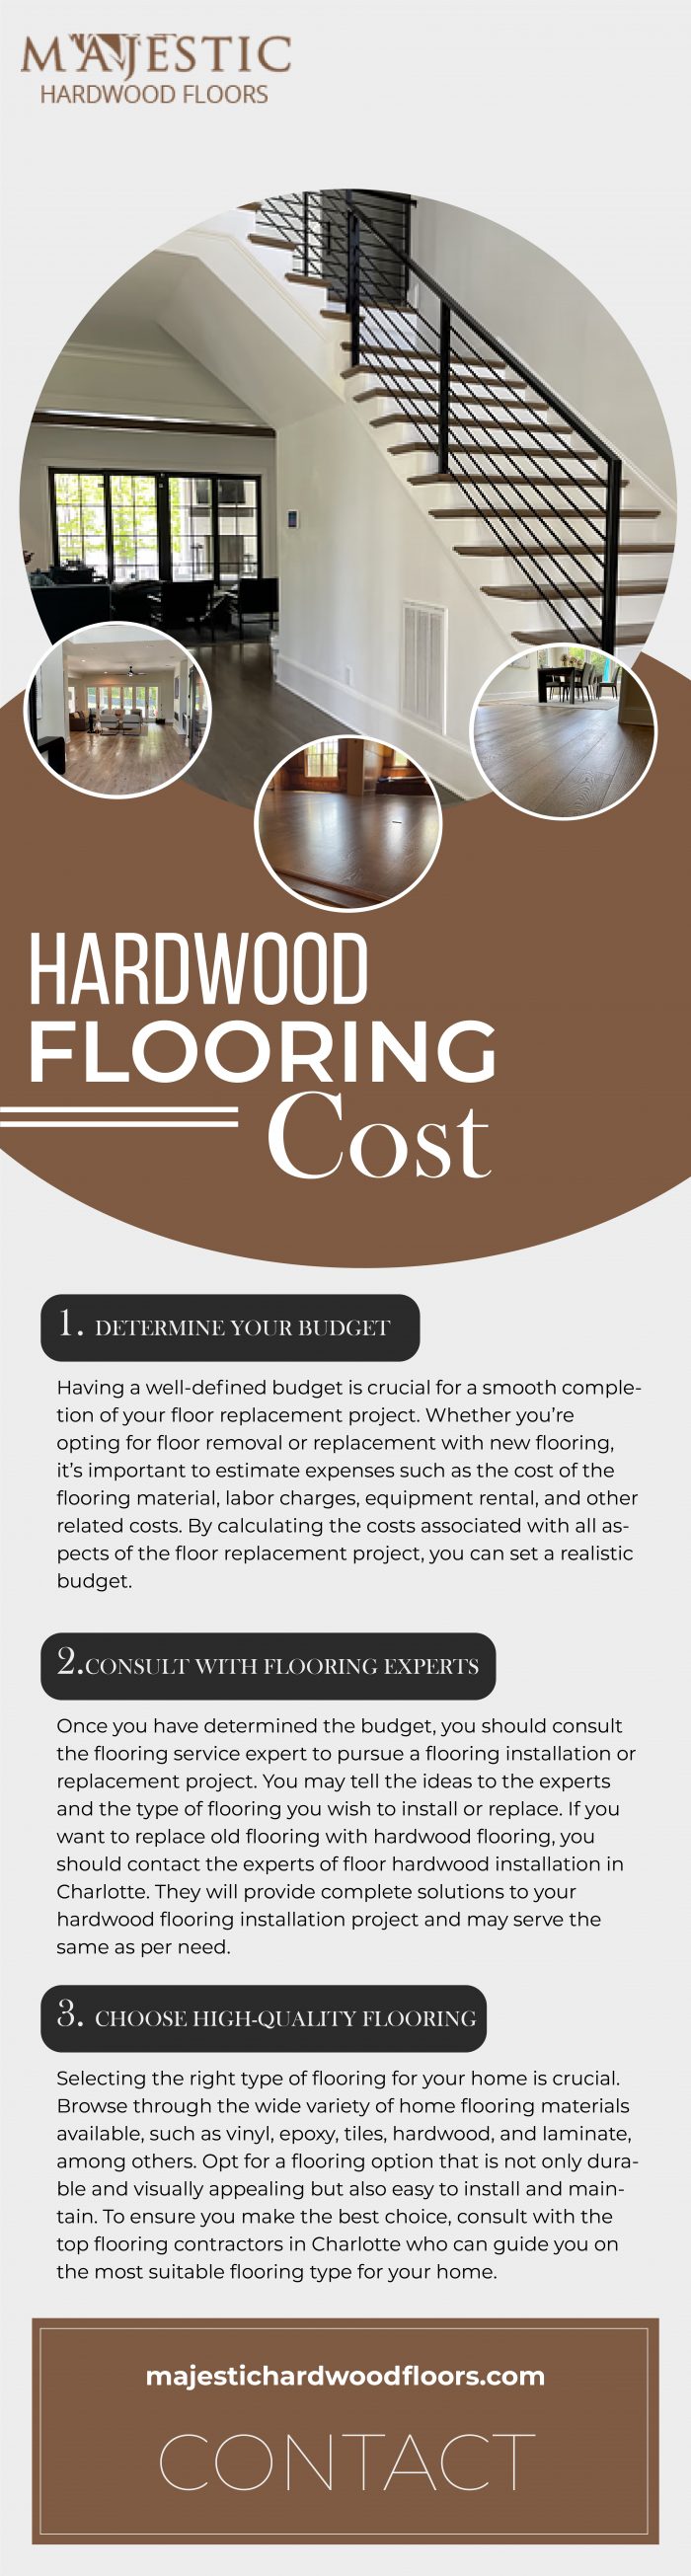 Get Clarity on Hardwood Flooring Cost with Majestic Hardwood Floors